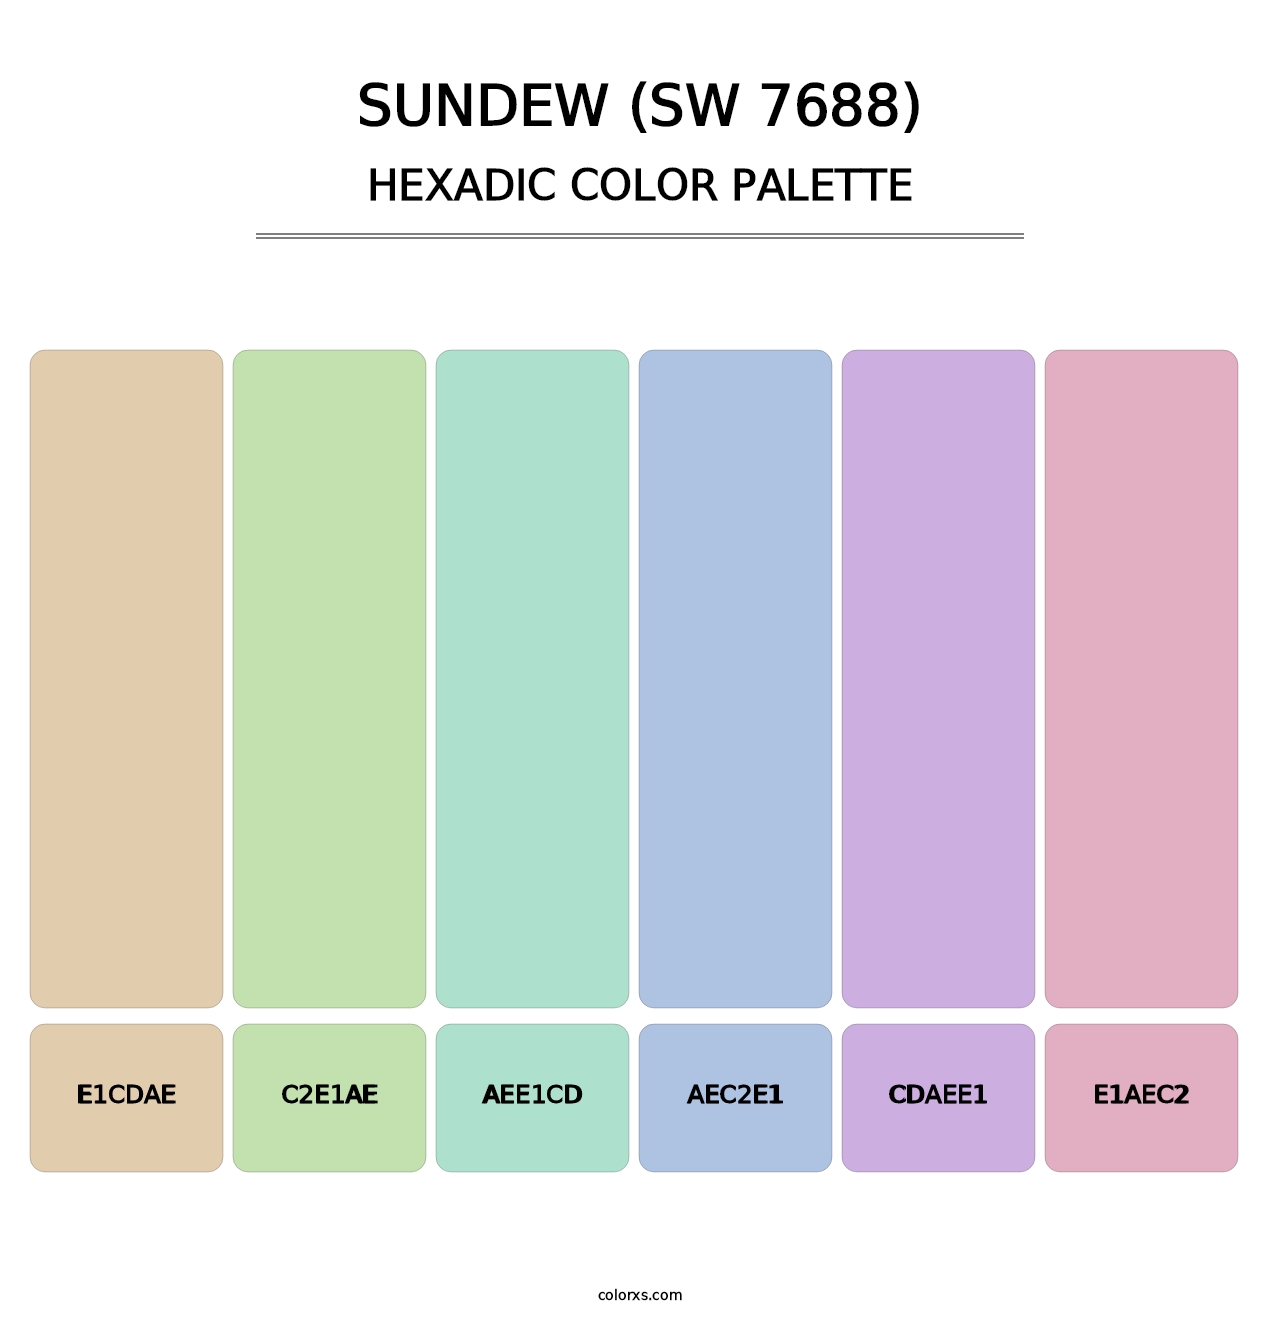 Sundew (SW 7688) - Hexadic Color Palette